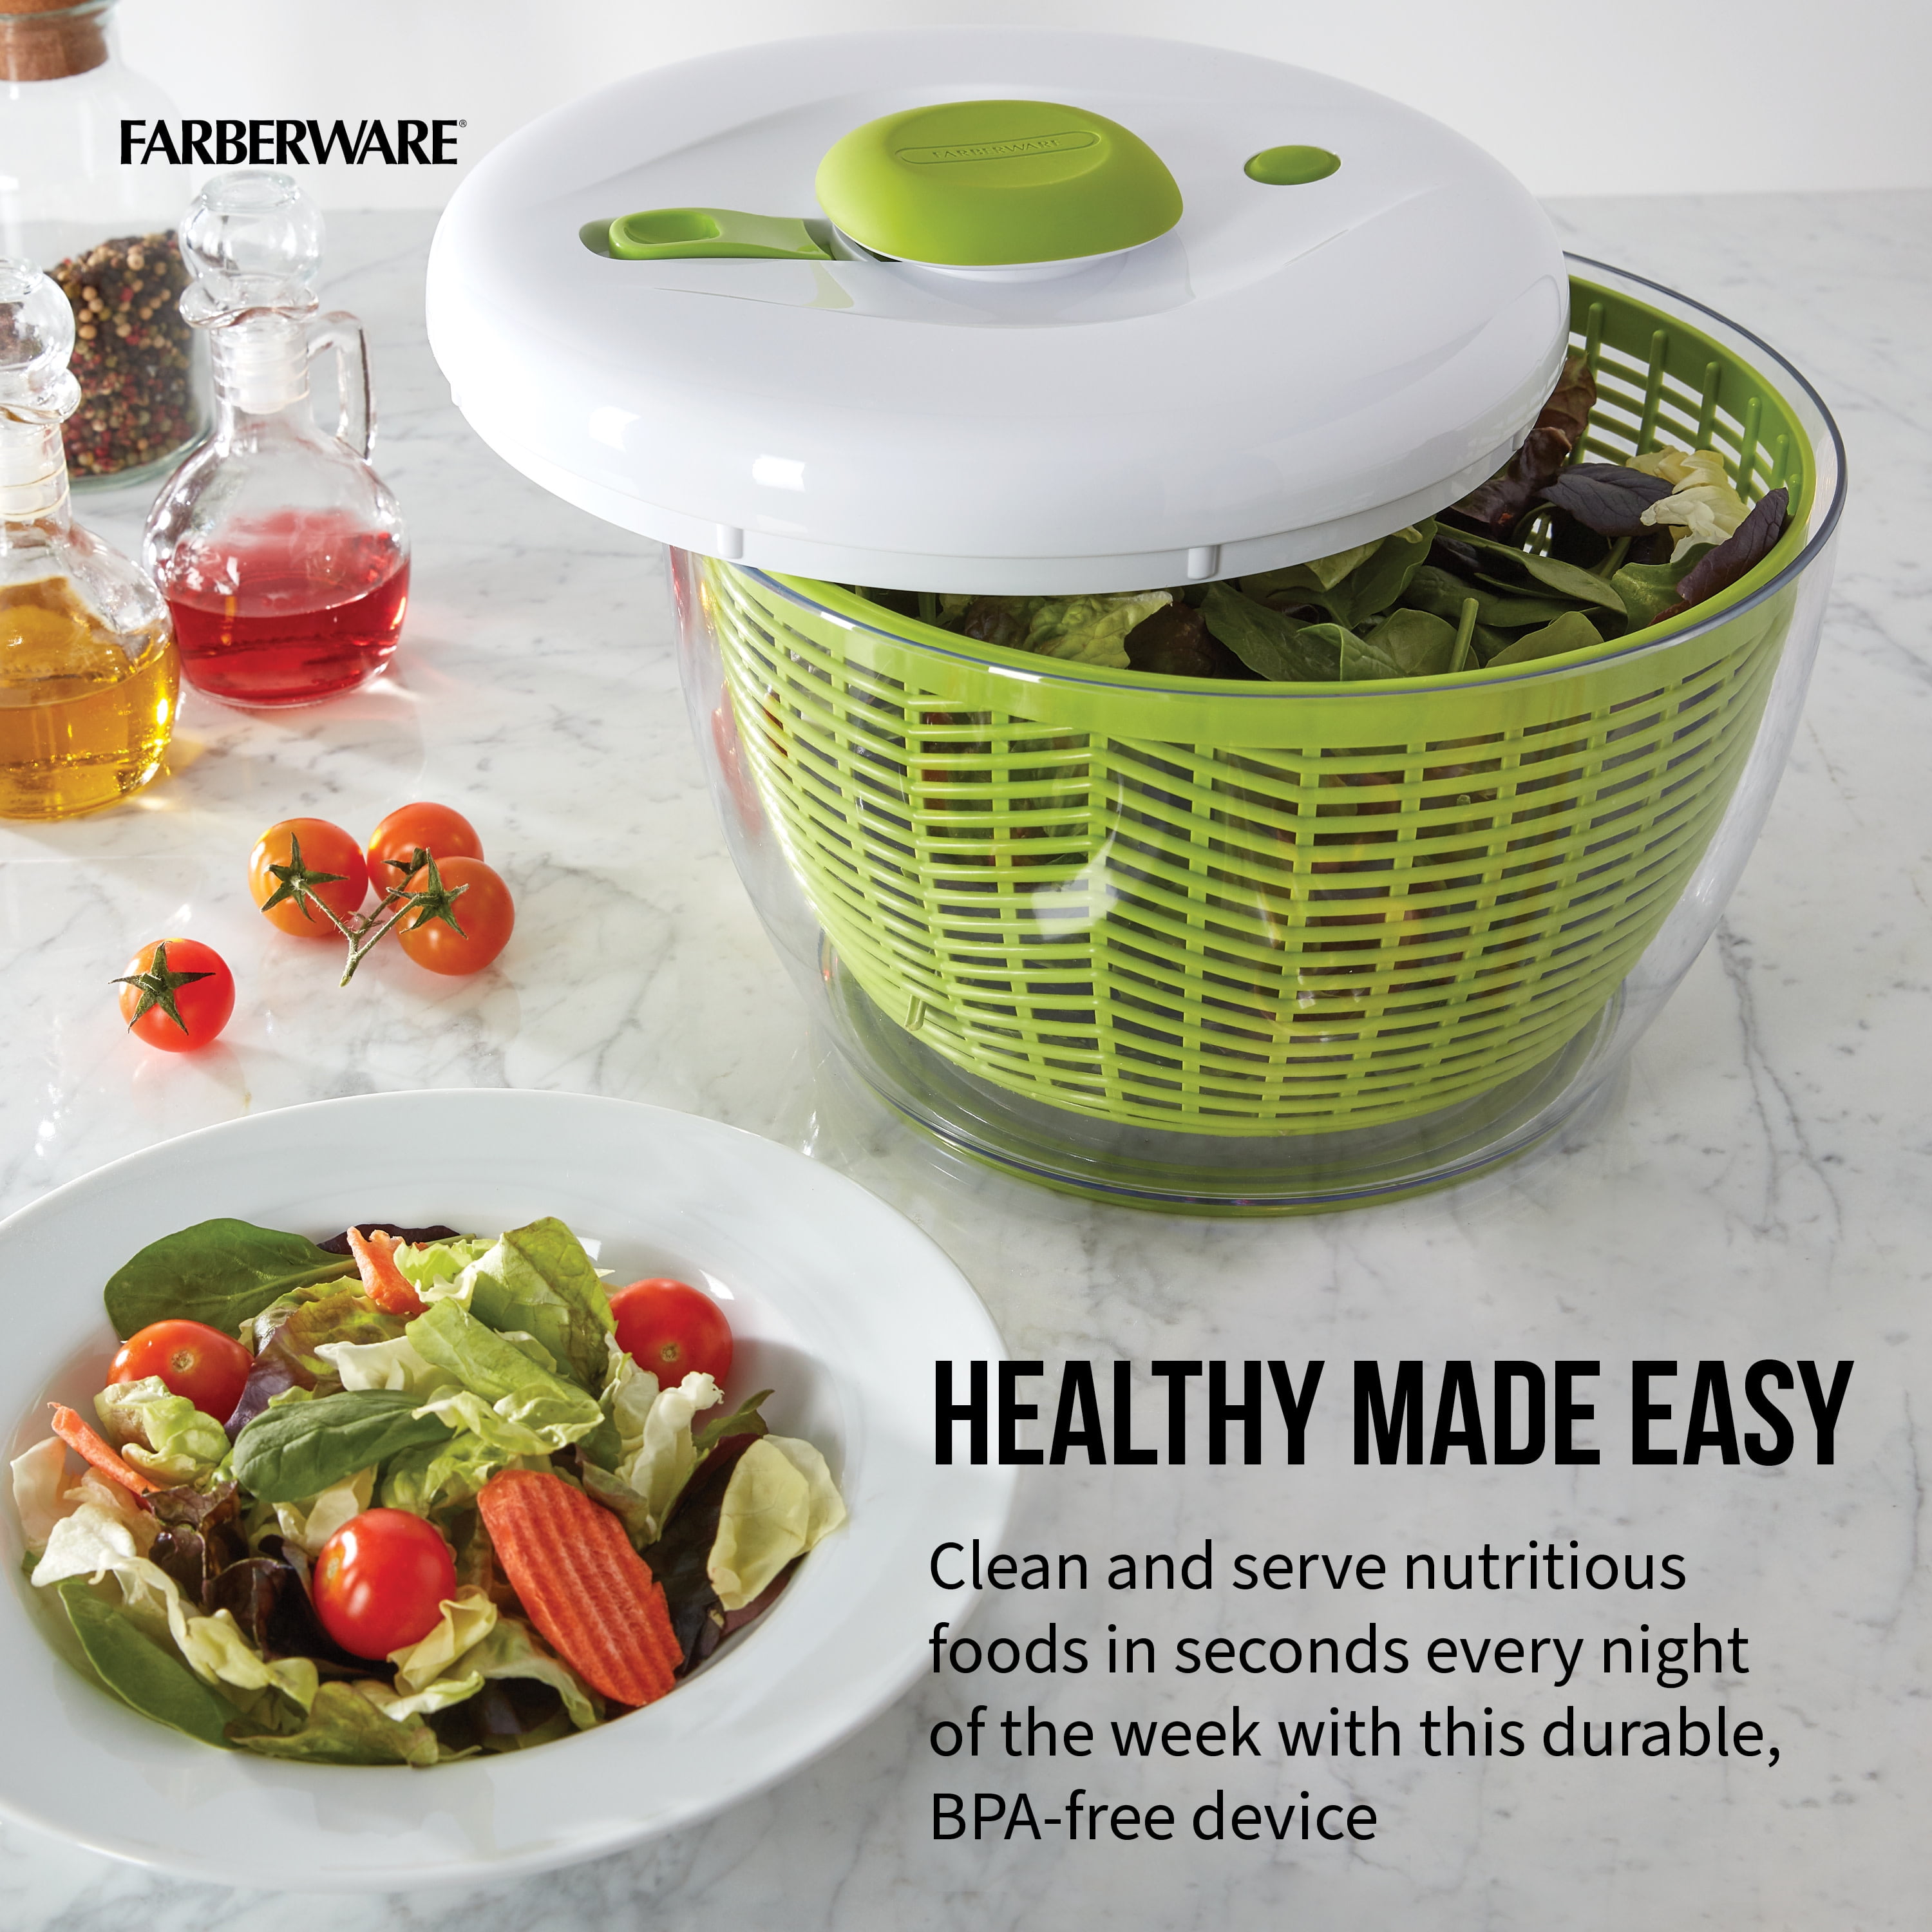 Faberware Pro Salad Spinner Bowl Colander Built In Draining 6.6 Quart